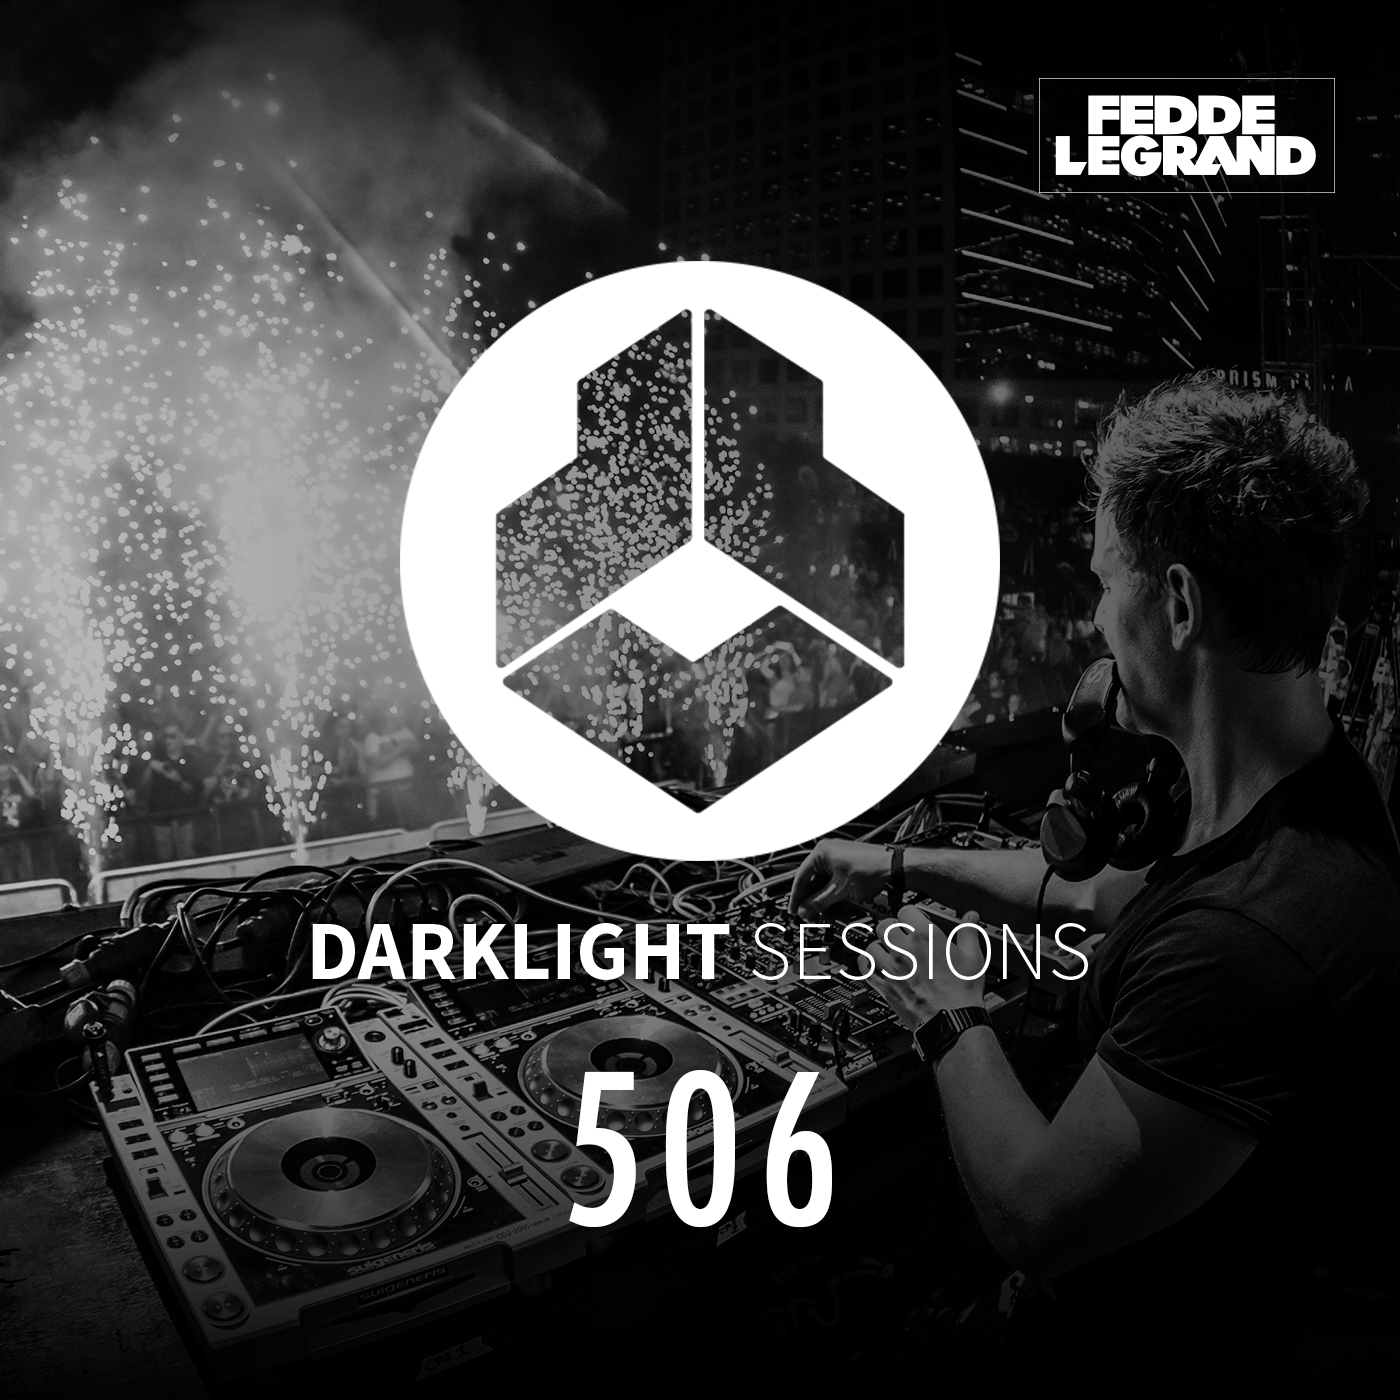 Darklight Sessions 506